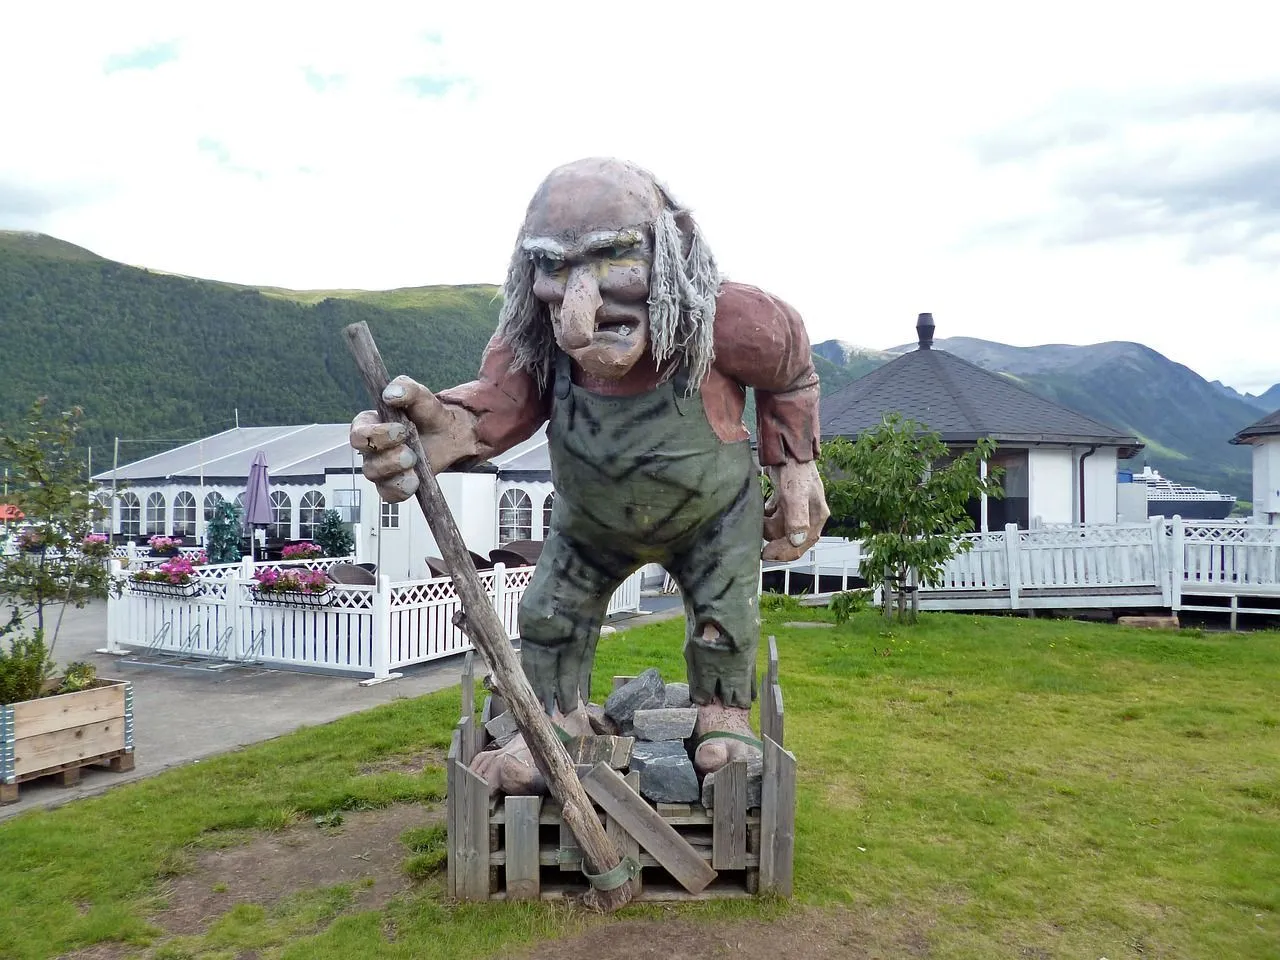 A troll statue in Norway